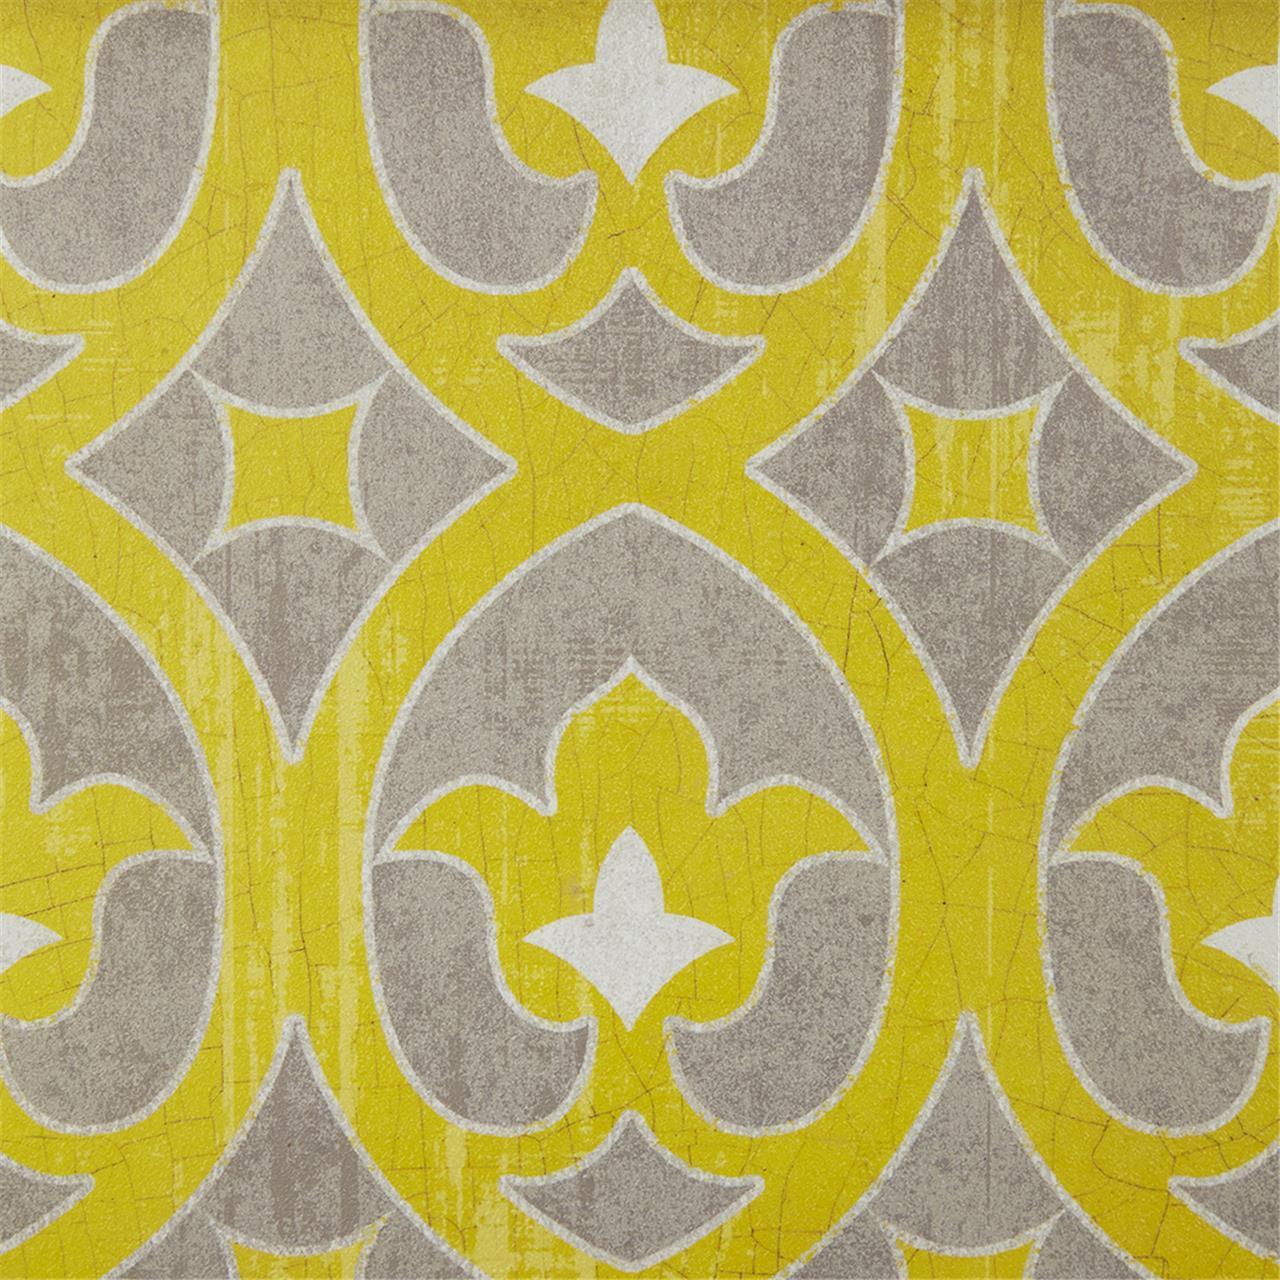 Tuscan Tiles Distressed Yellow Medallion 3-piece Wall Decor Set